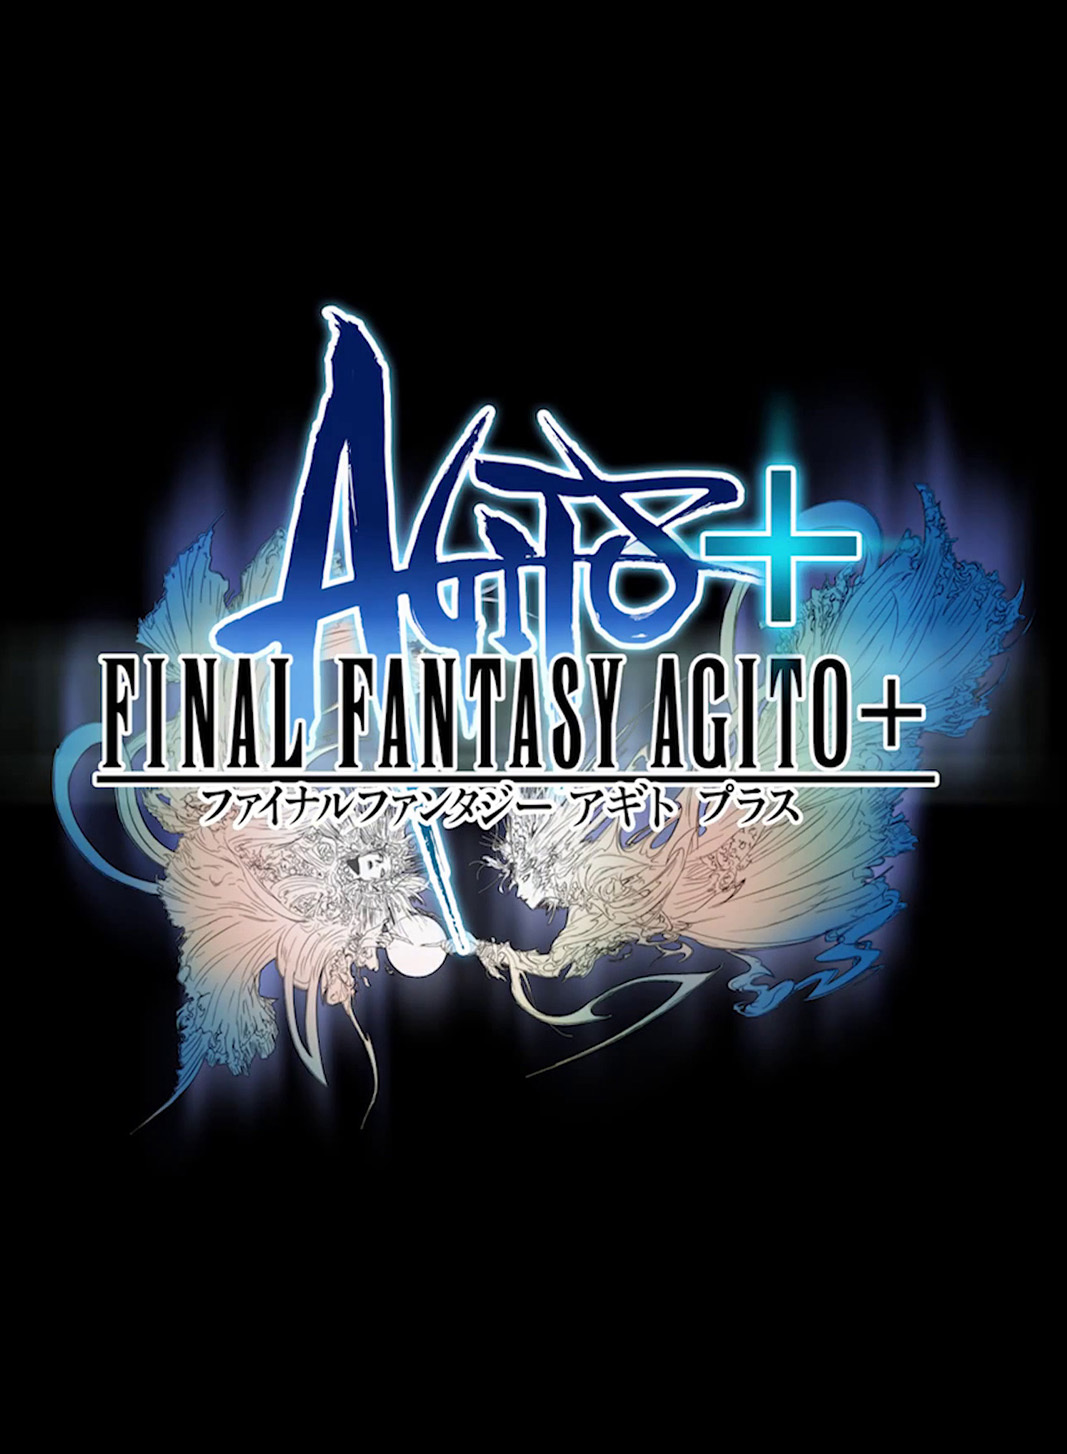 Final Fantasy Agito+, постер № 1